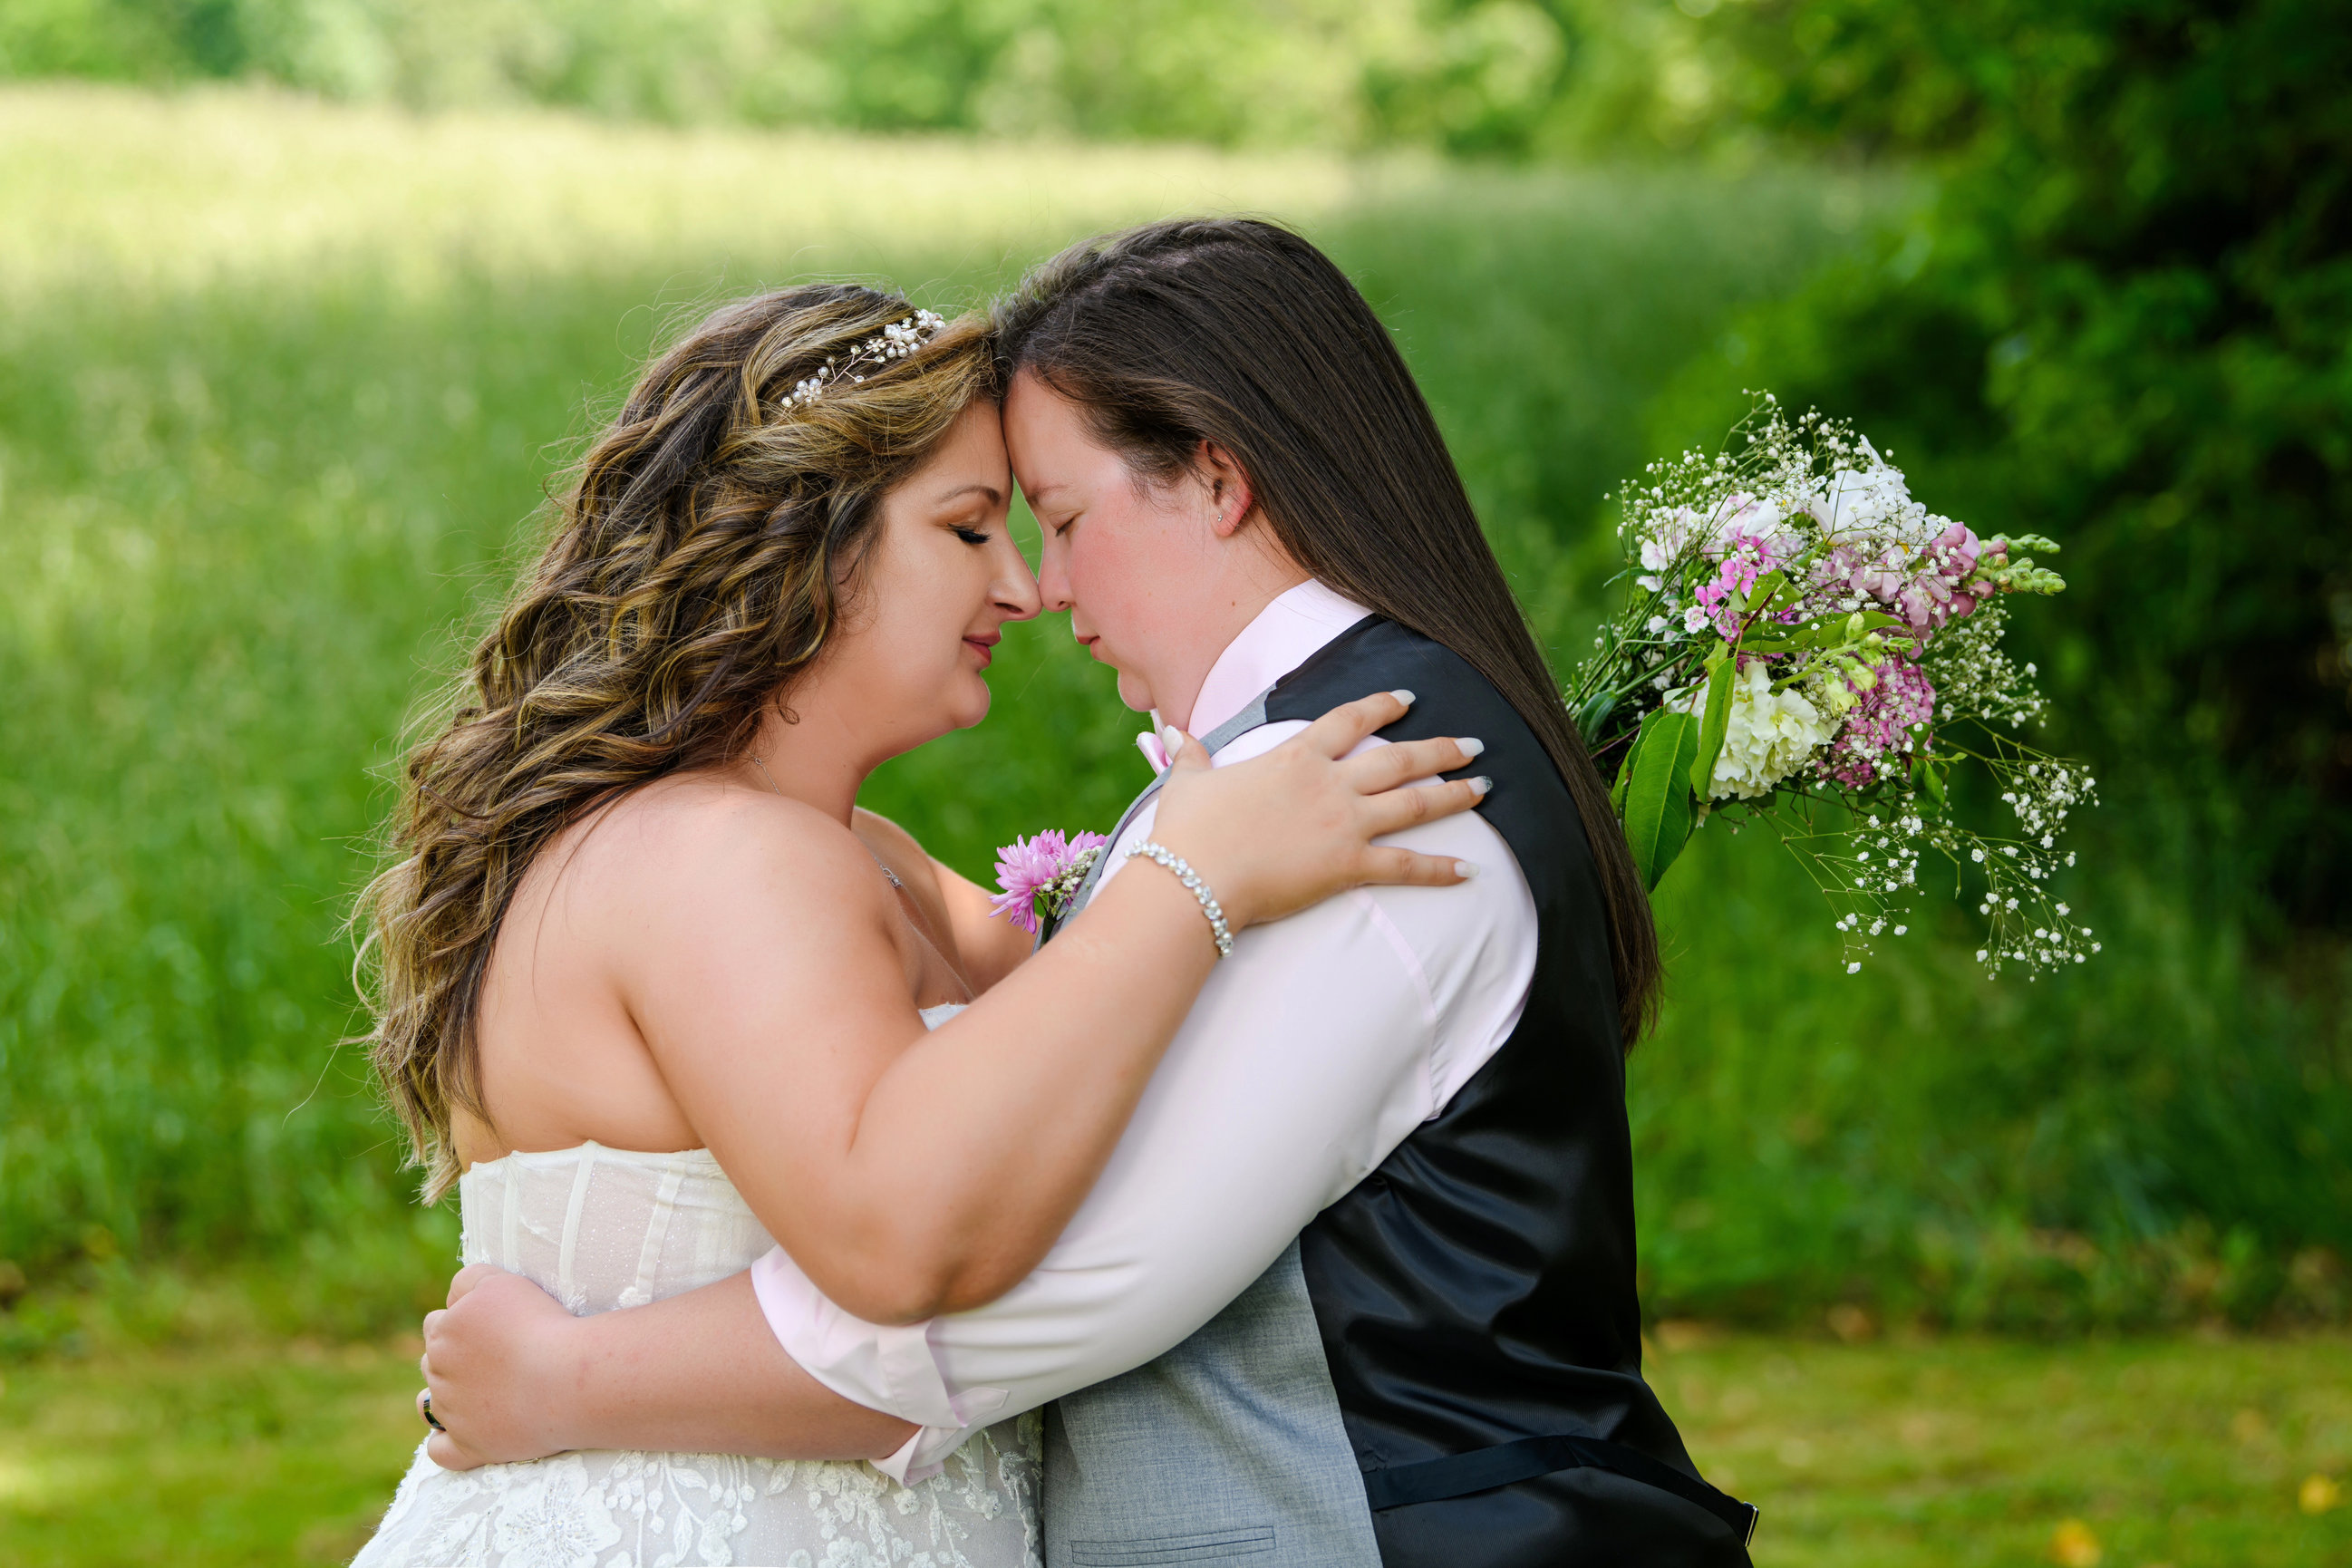 Wedding Photo Checklist: Your Must-Have Photos